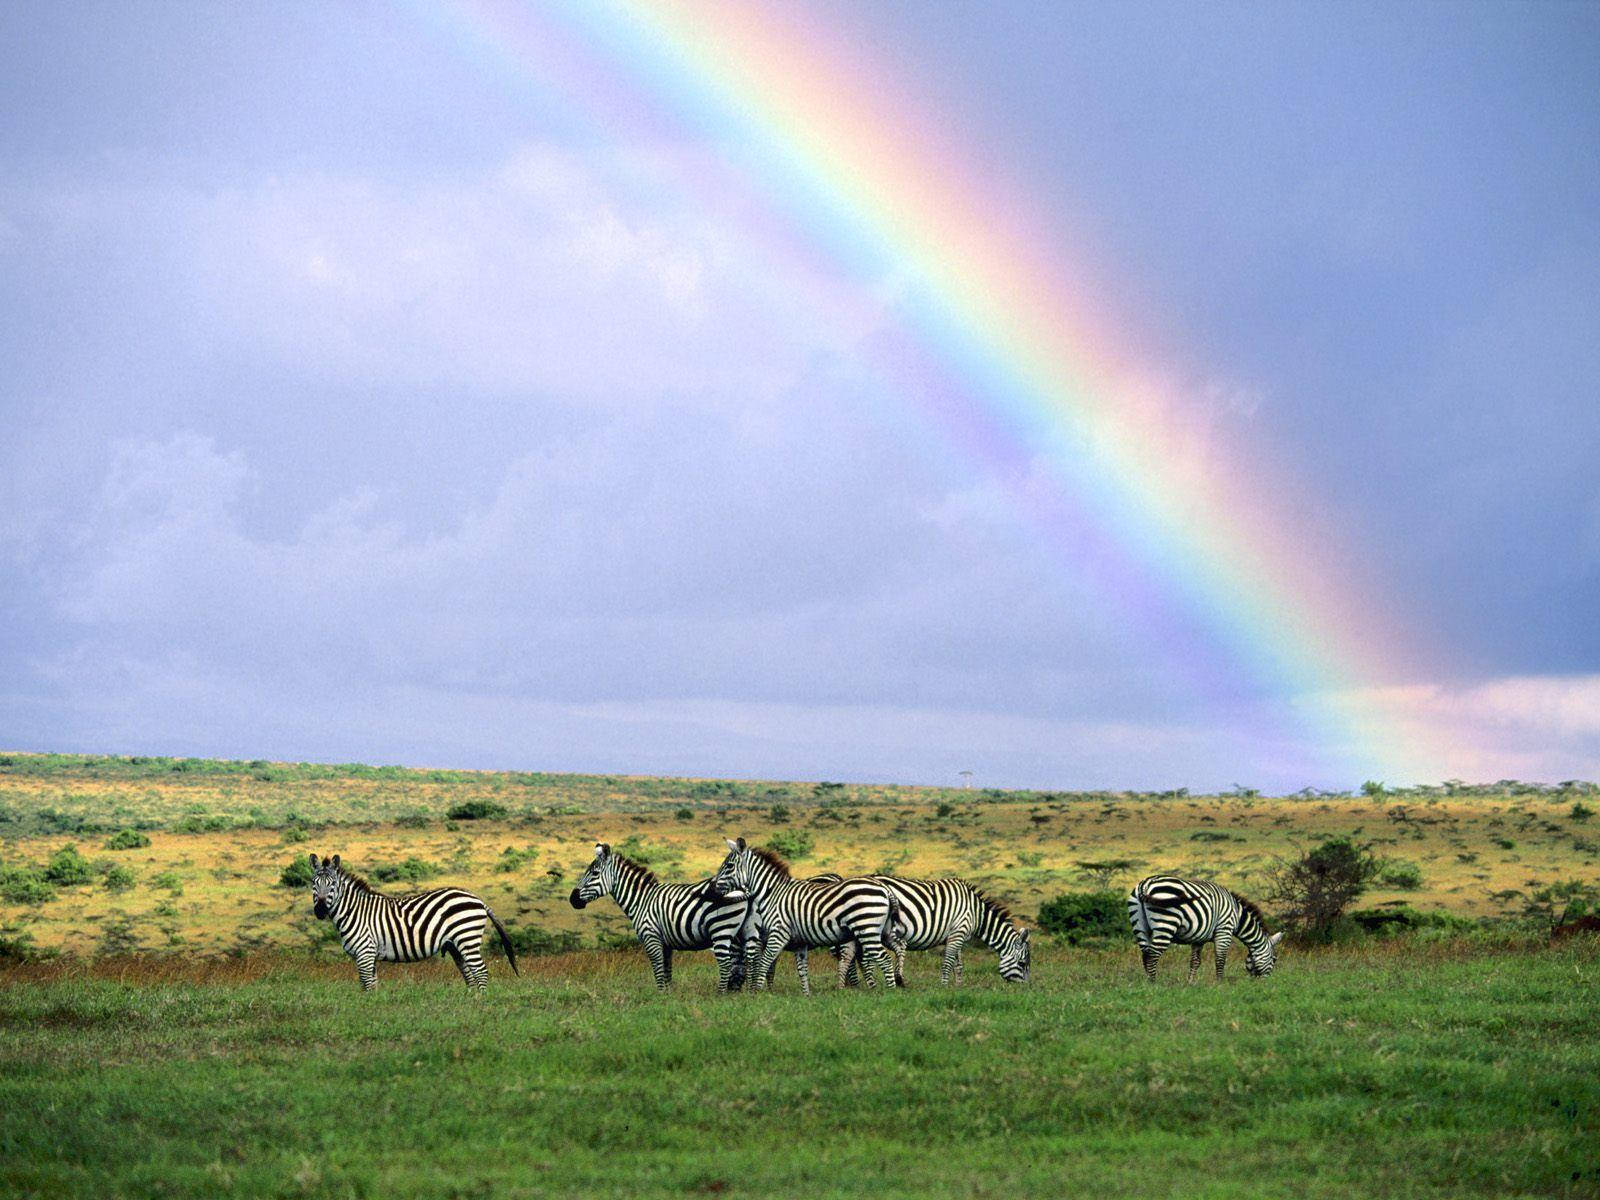 Kenyagrassy Safari Field: Kenya Gräsrika Safarifält. Wallpaper